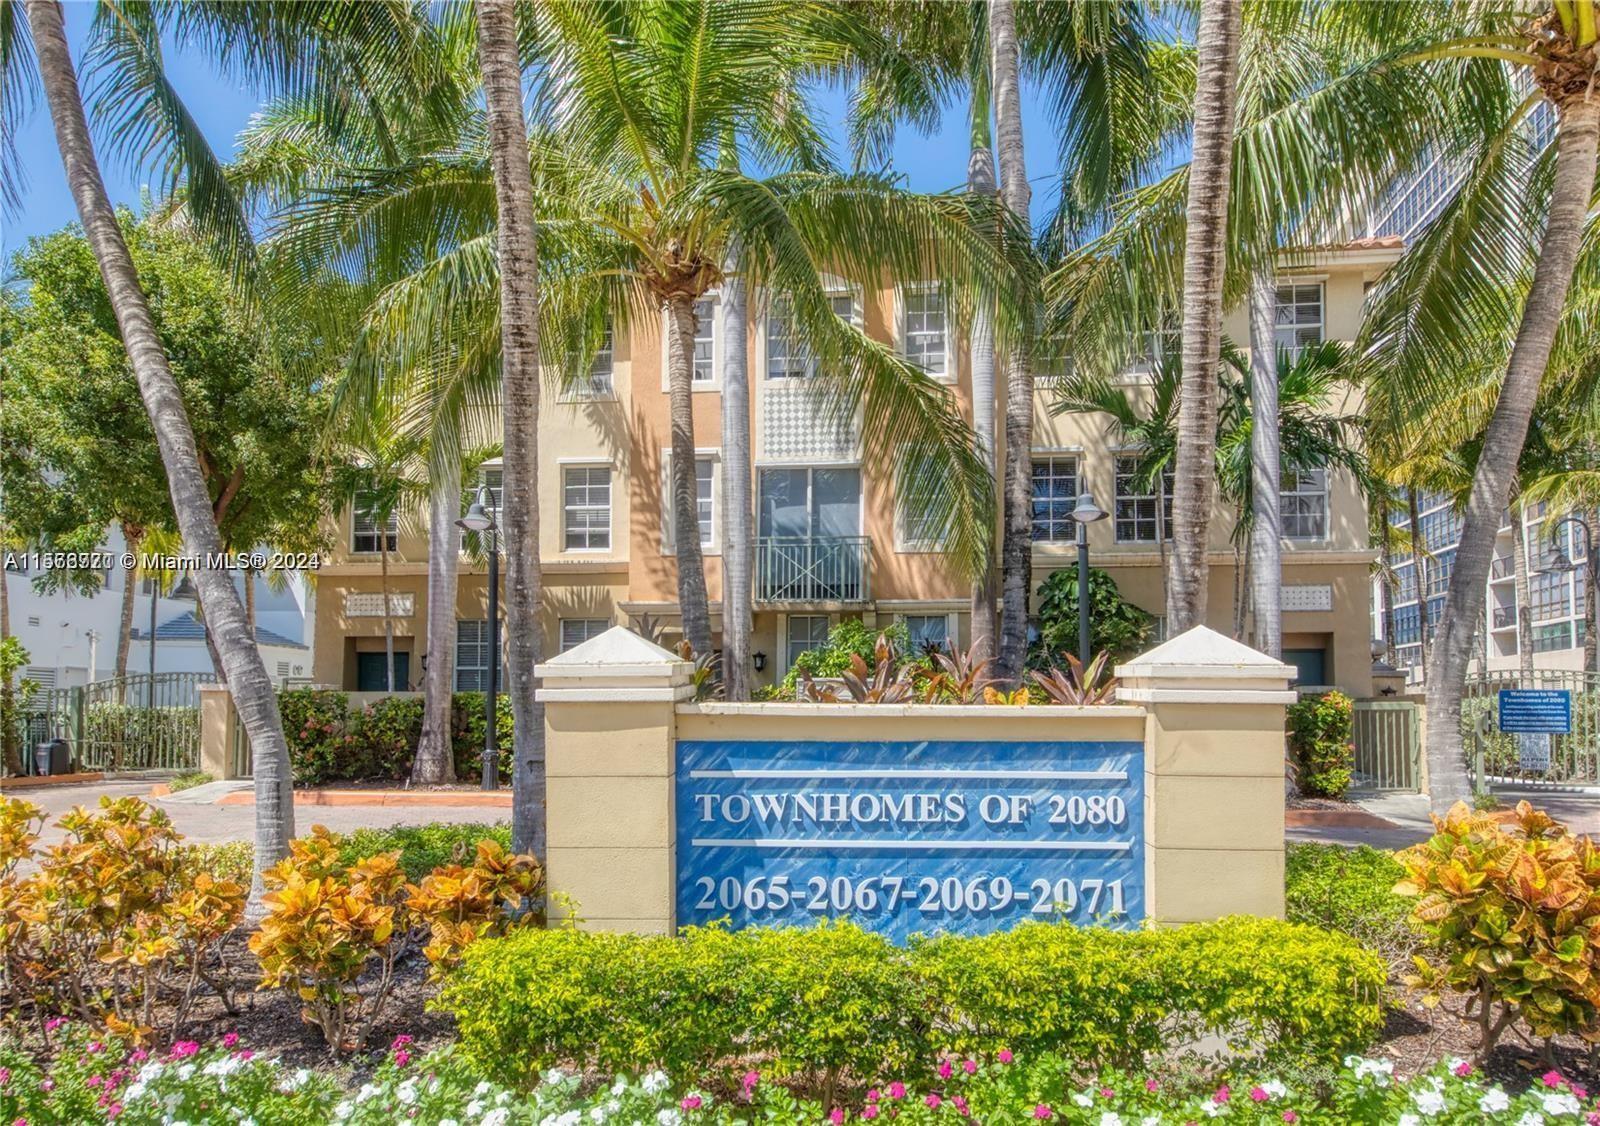 Property for Sale at 2069 S Ocean Dr Th11, Hallandale Beach, Broward County, Florida - Bedrooms: 3 
Bathrooms: 3  - $674,900